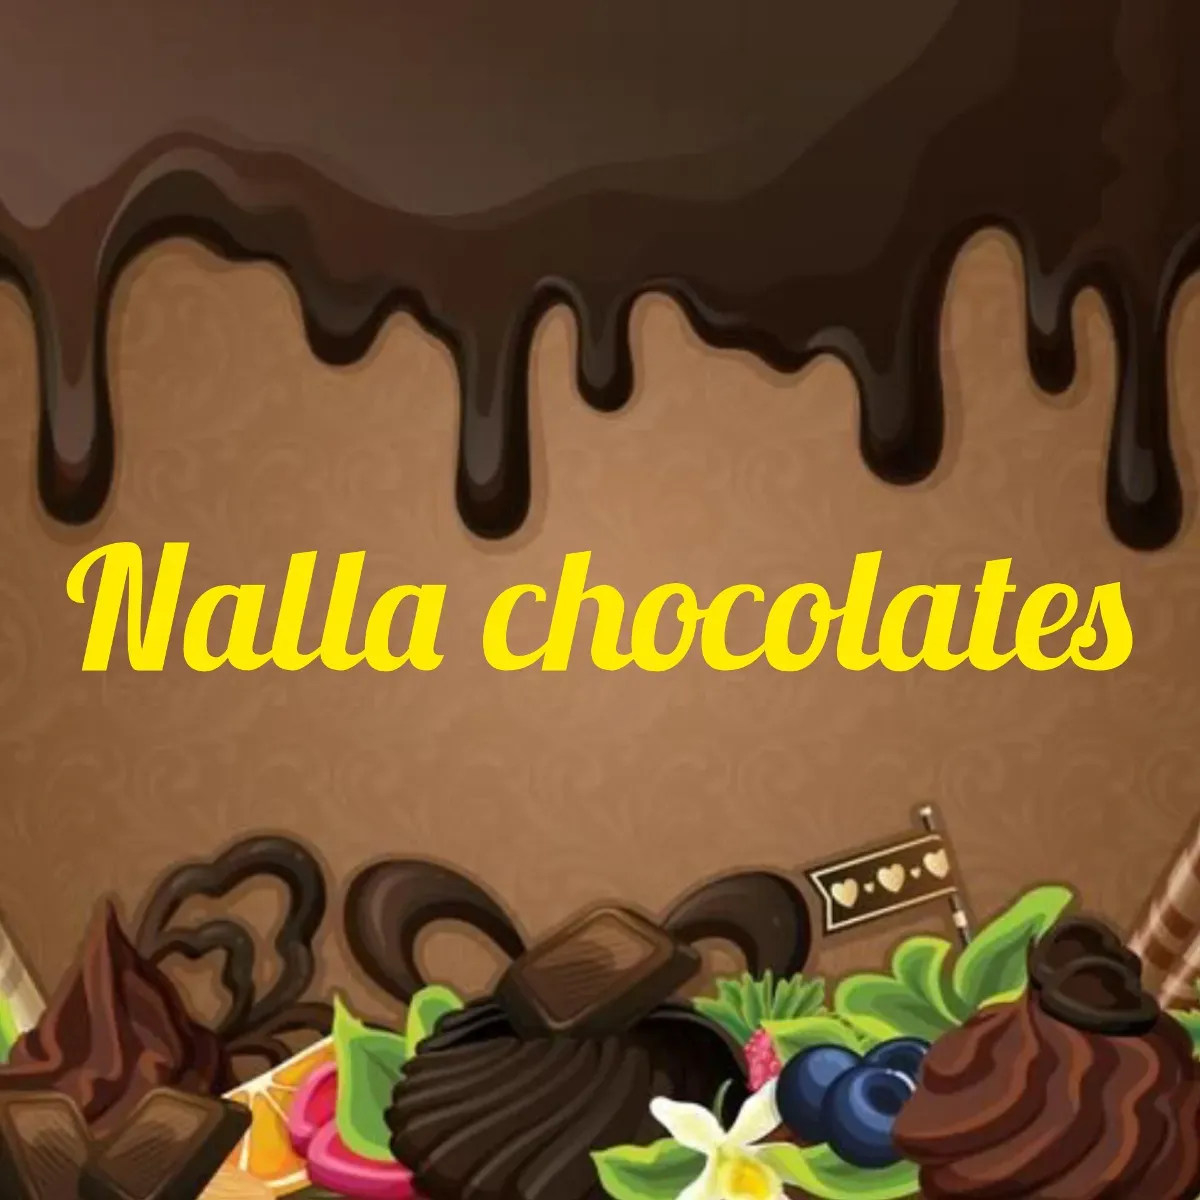 Nalla chocolates